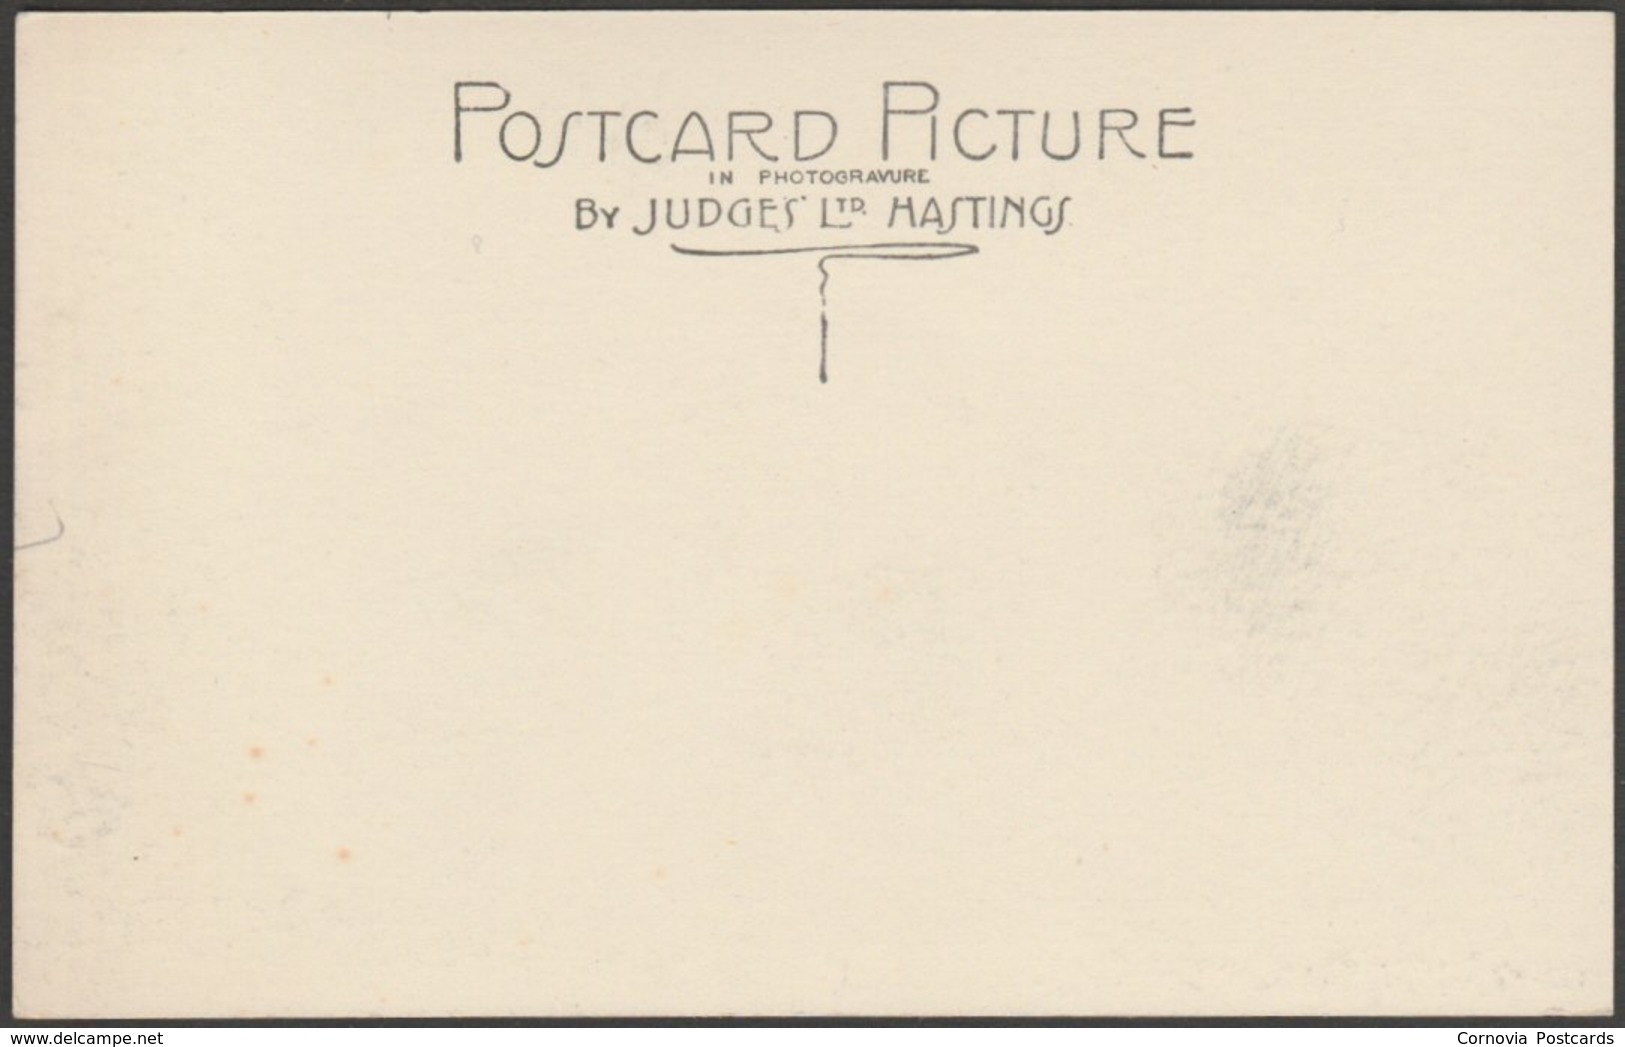 Rippon Tor, Dartmoor, Devon, 1922 - Judges Postcard - Dartmoor